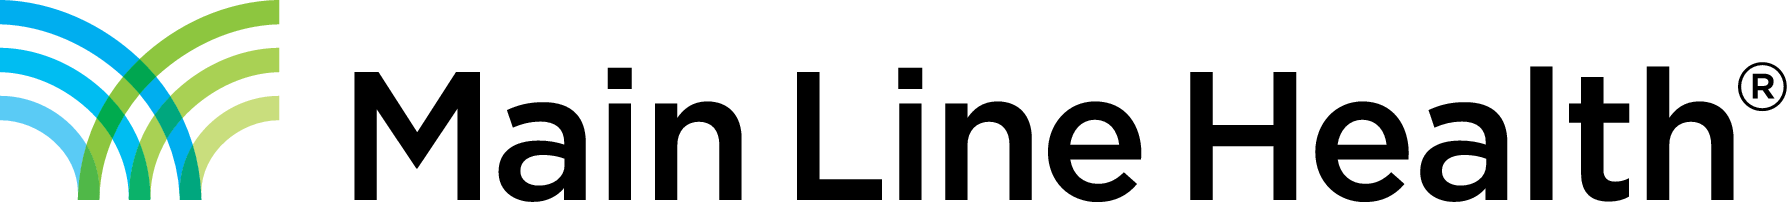 mlh-logo-black-text